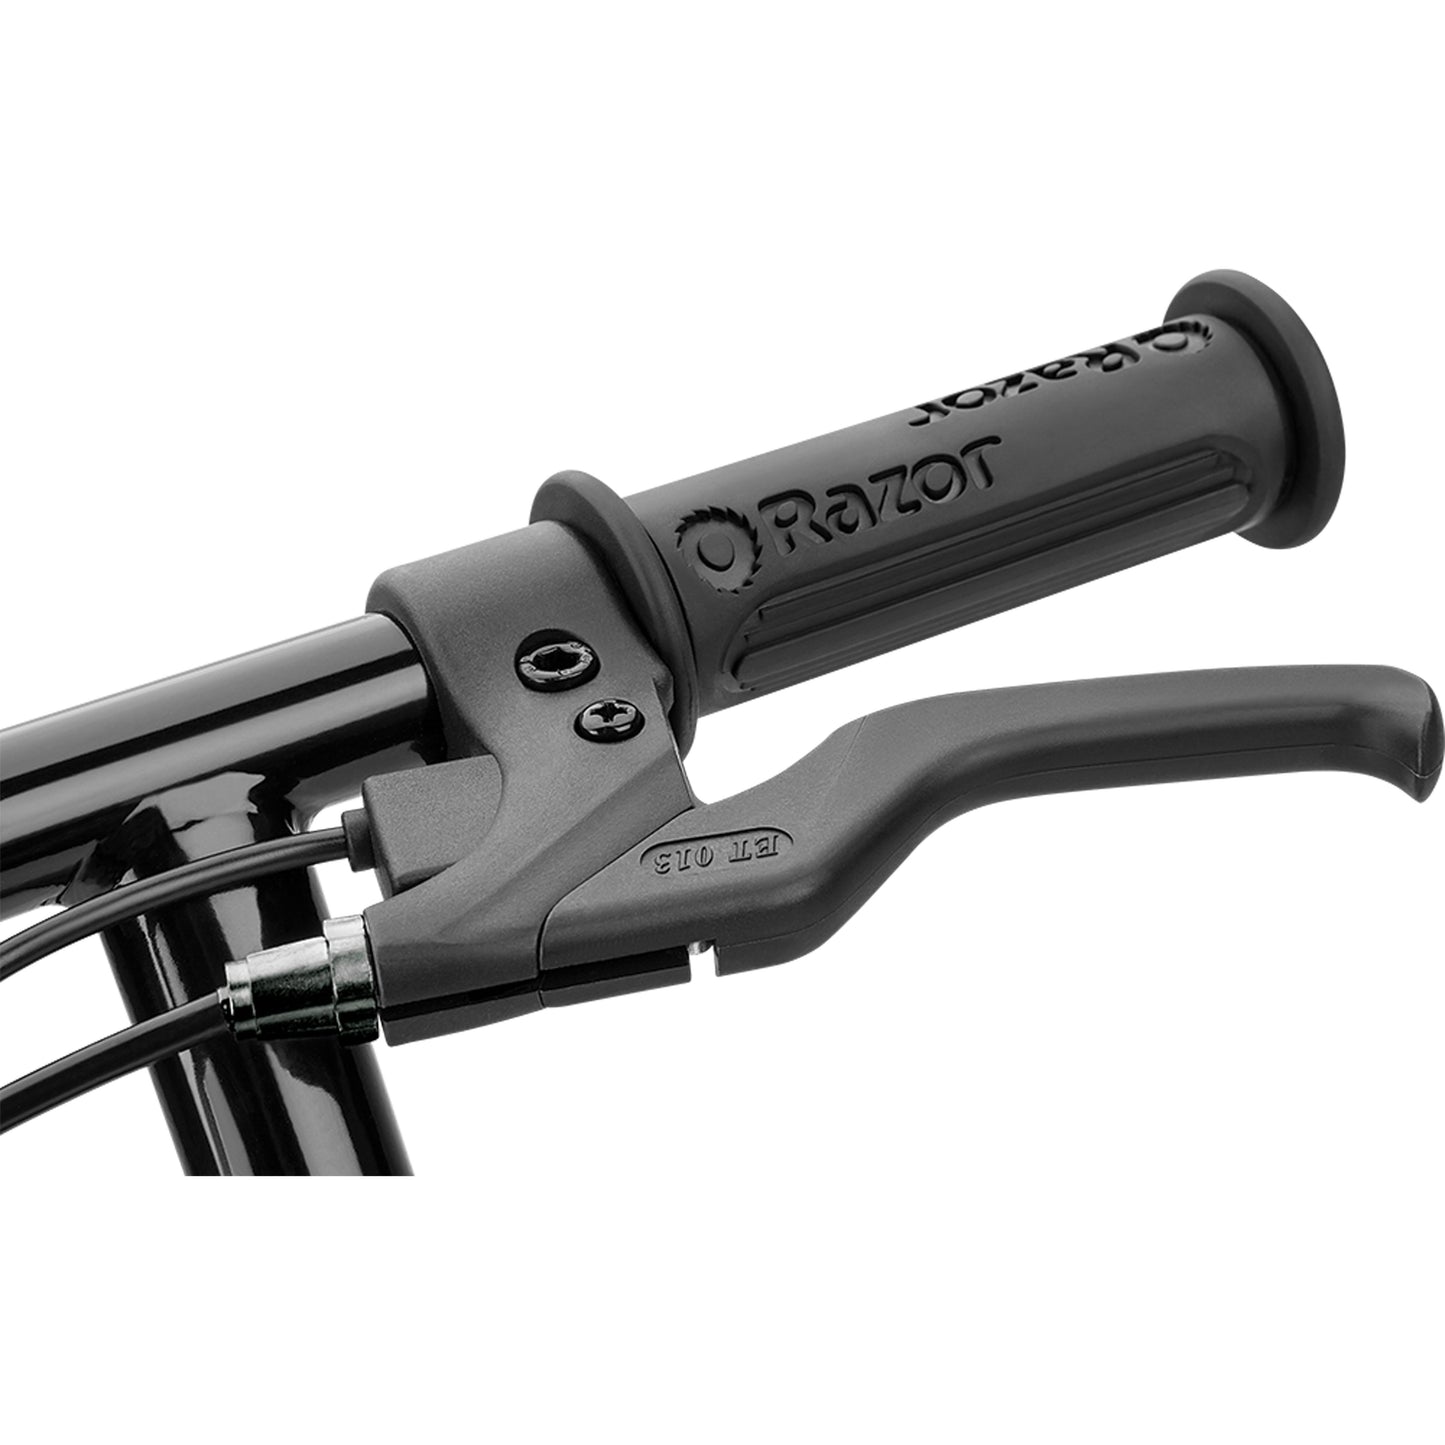 Razor Power Core E90 12 Volt Scooter - Black handlebar grip and brake close up